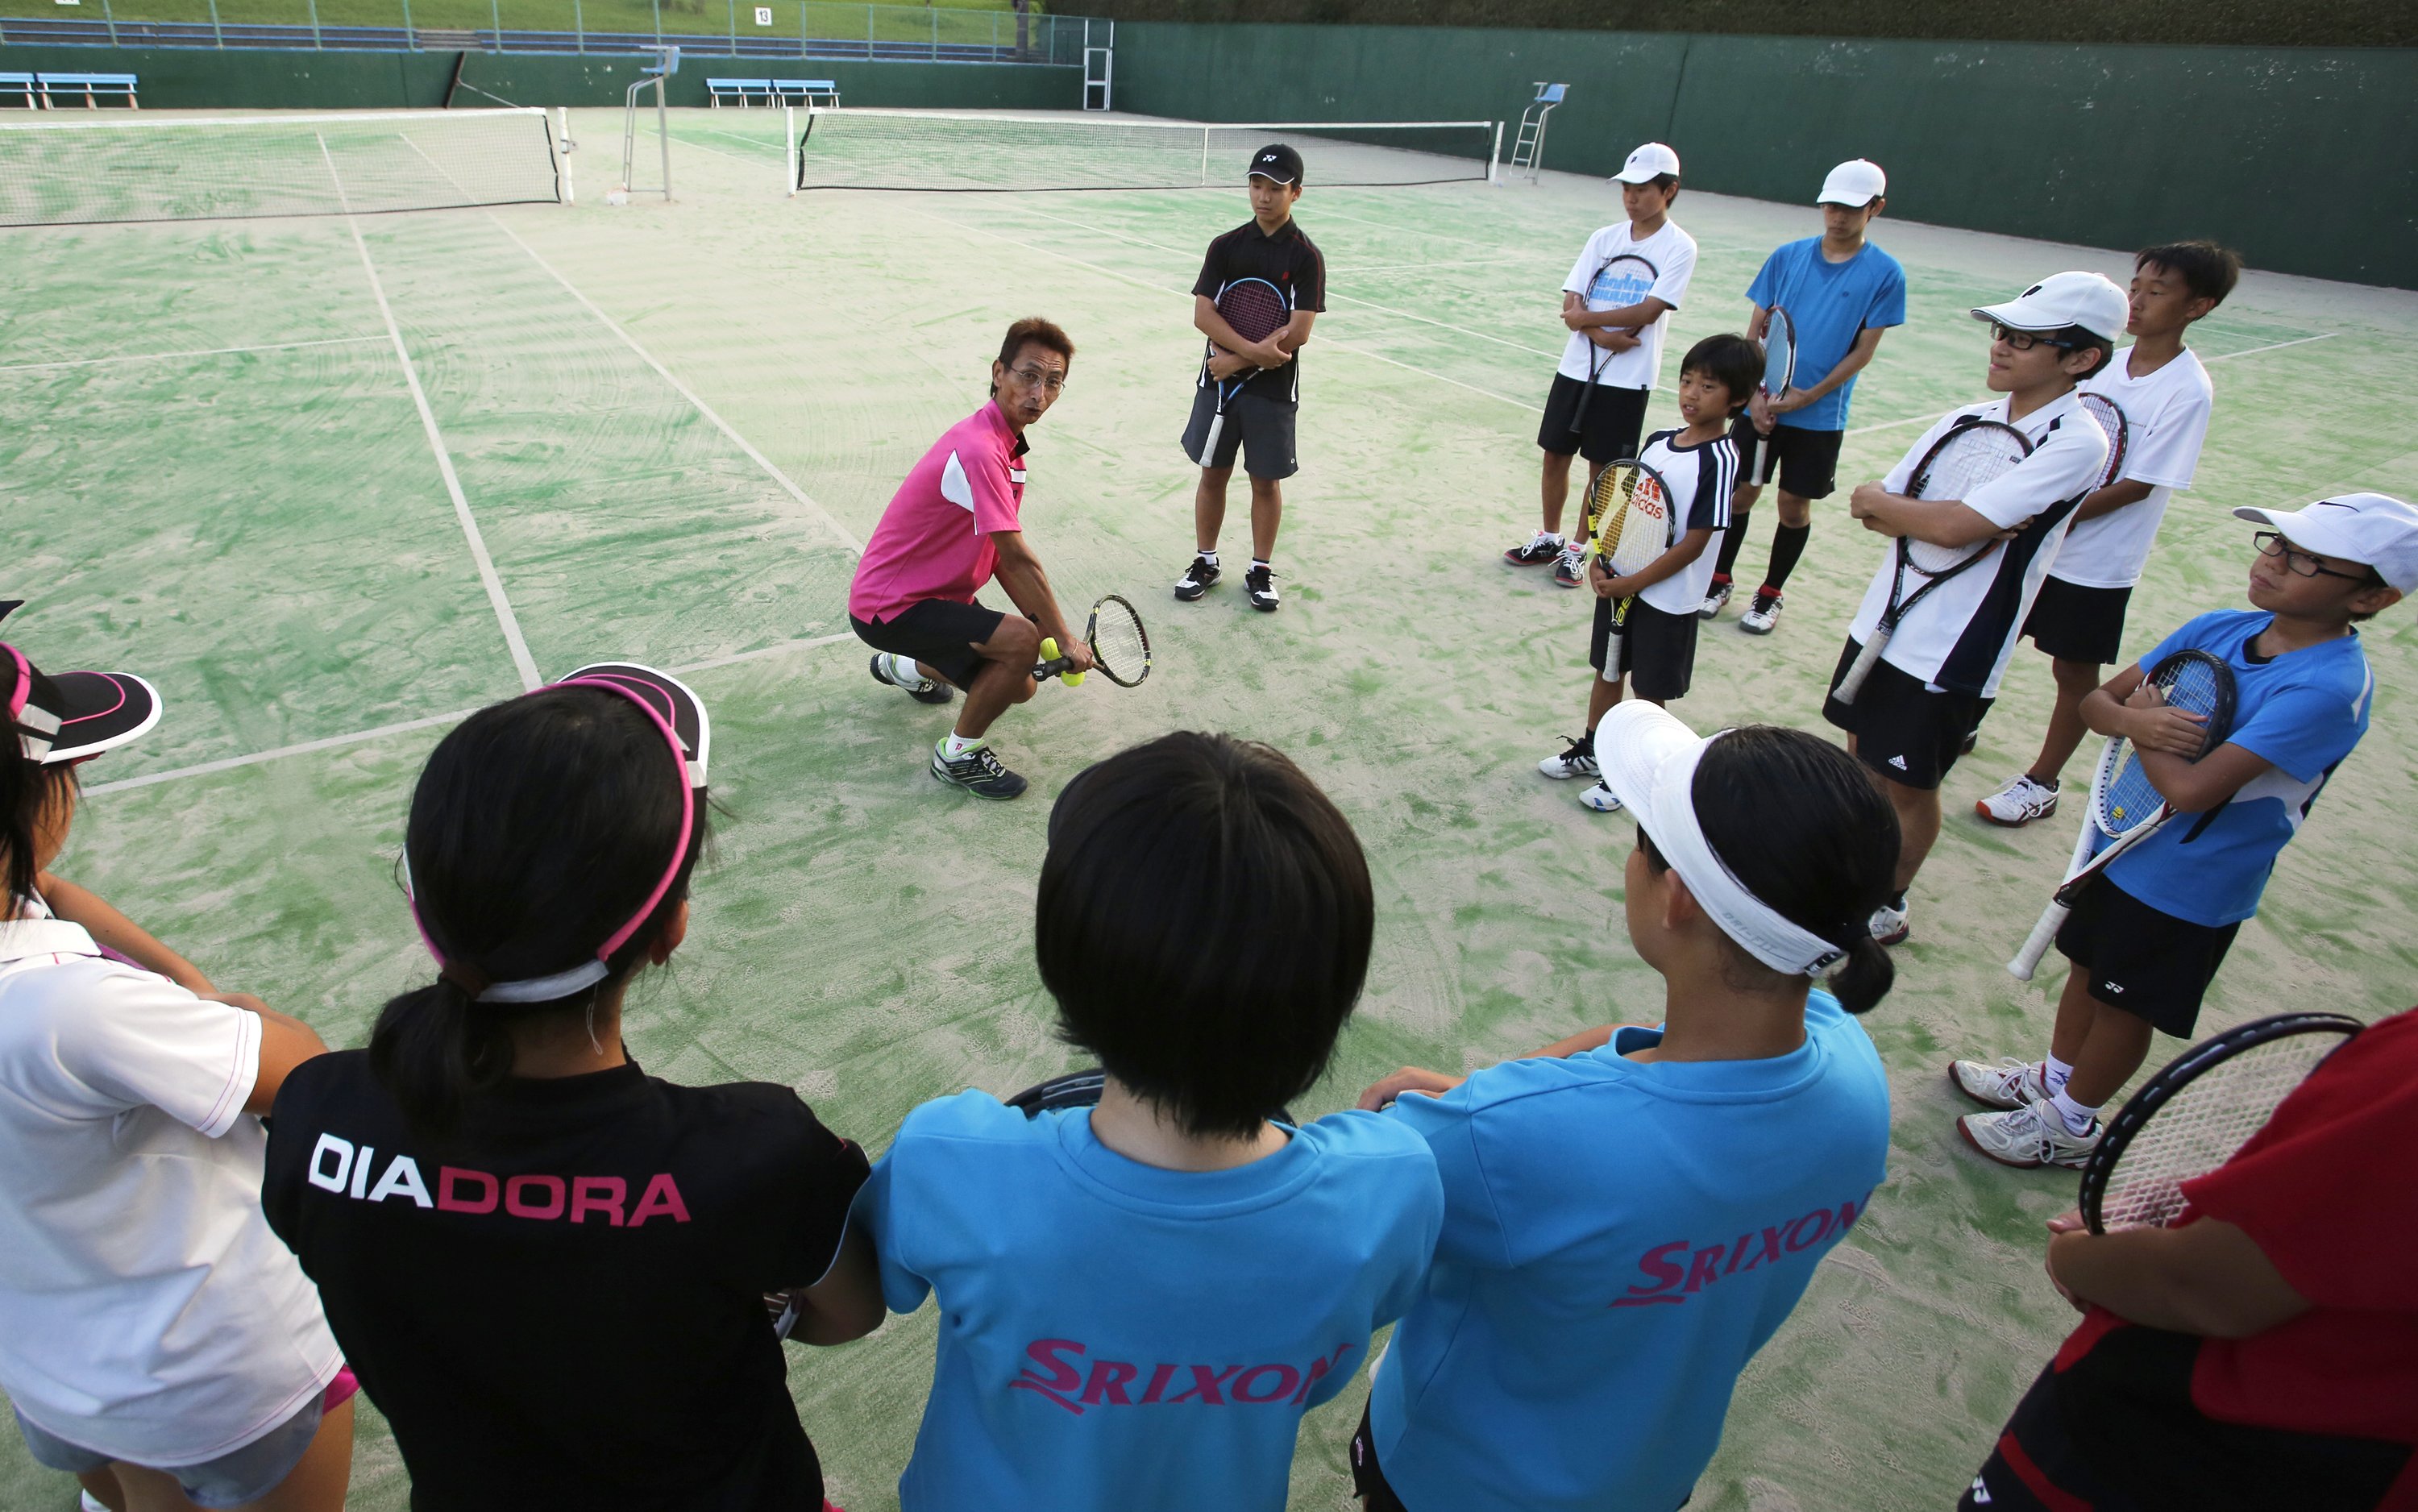 Green Tennis Garden coach Masaki Kashiwai teaches his students during lessons in the hometown of Japanese tennis player Kei Nishikori, Matsue, Japan on Sept. 8, 2014.